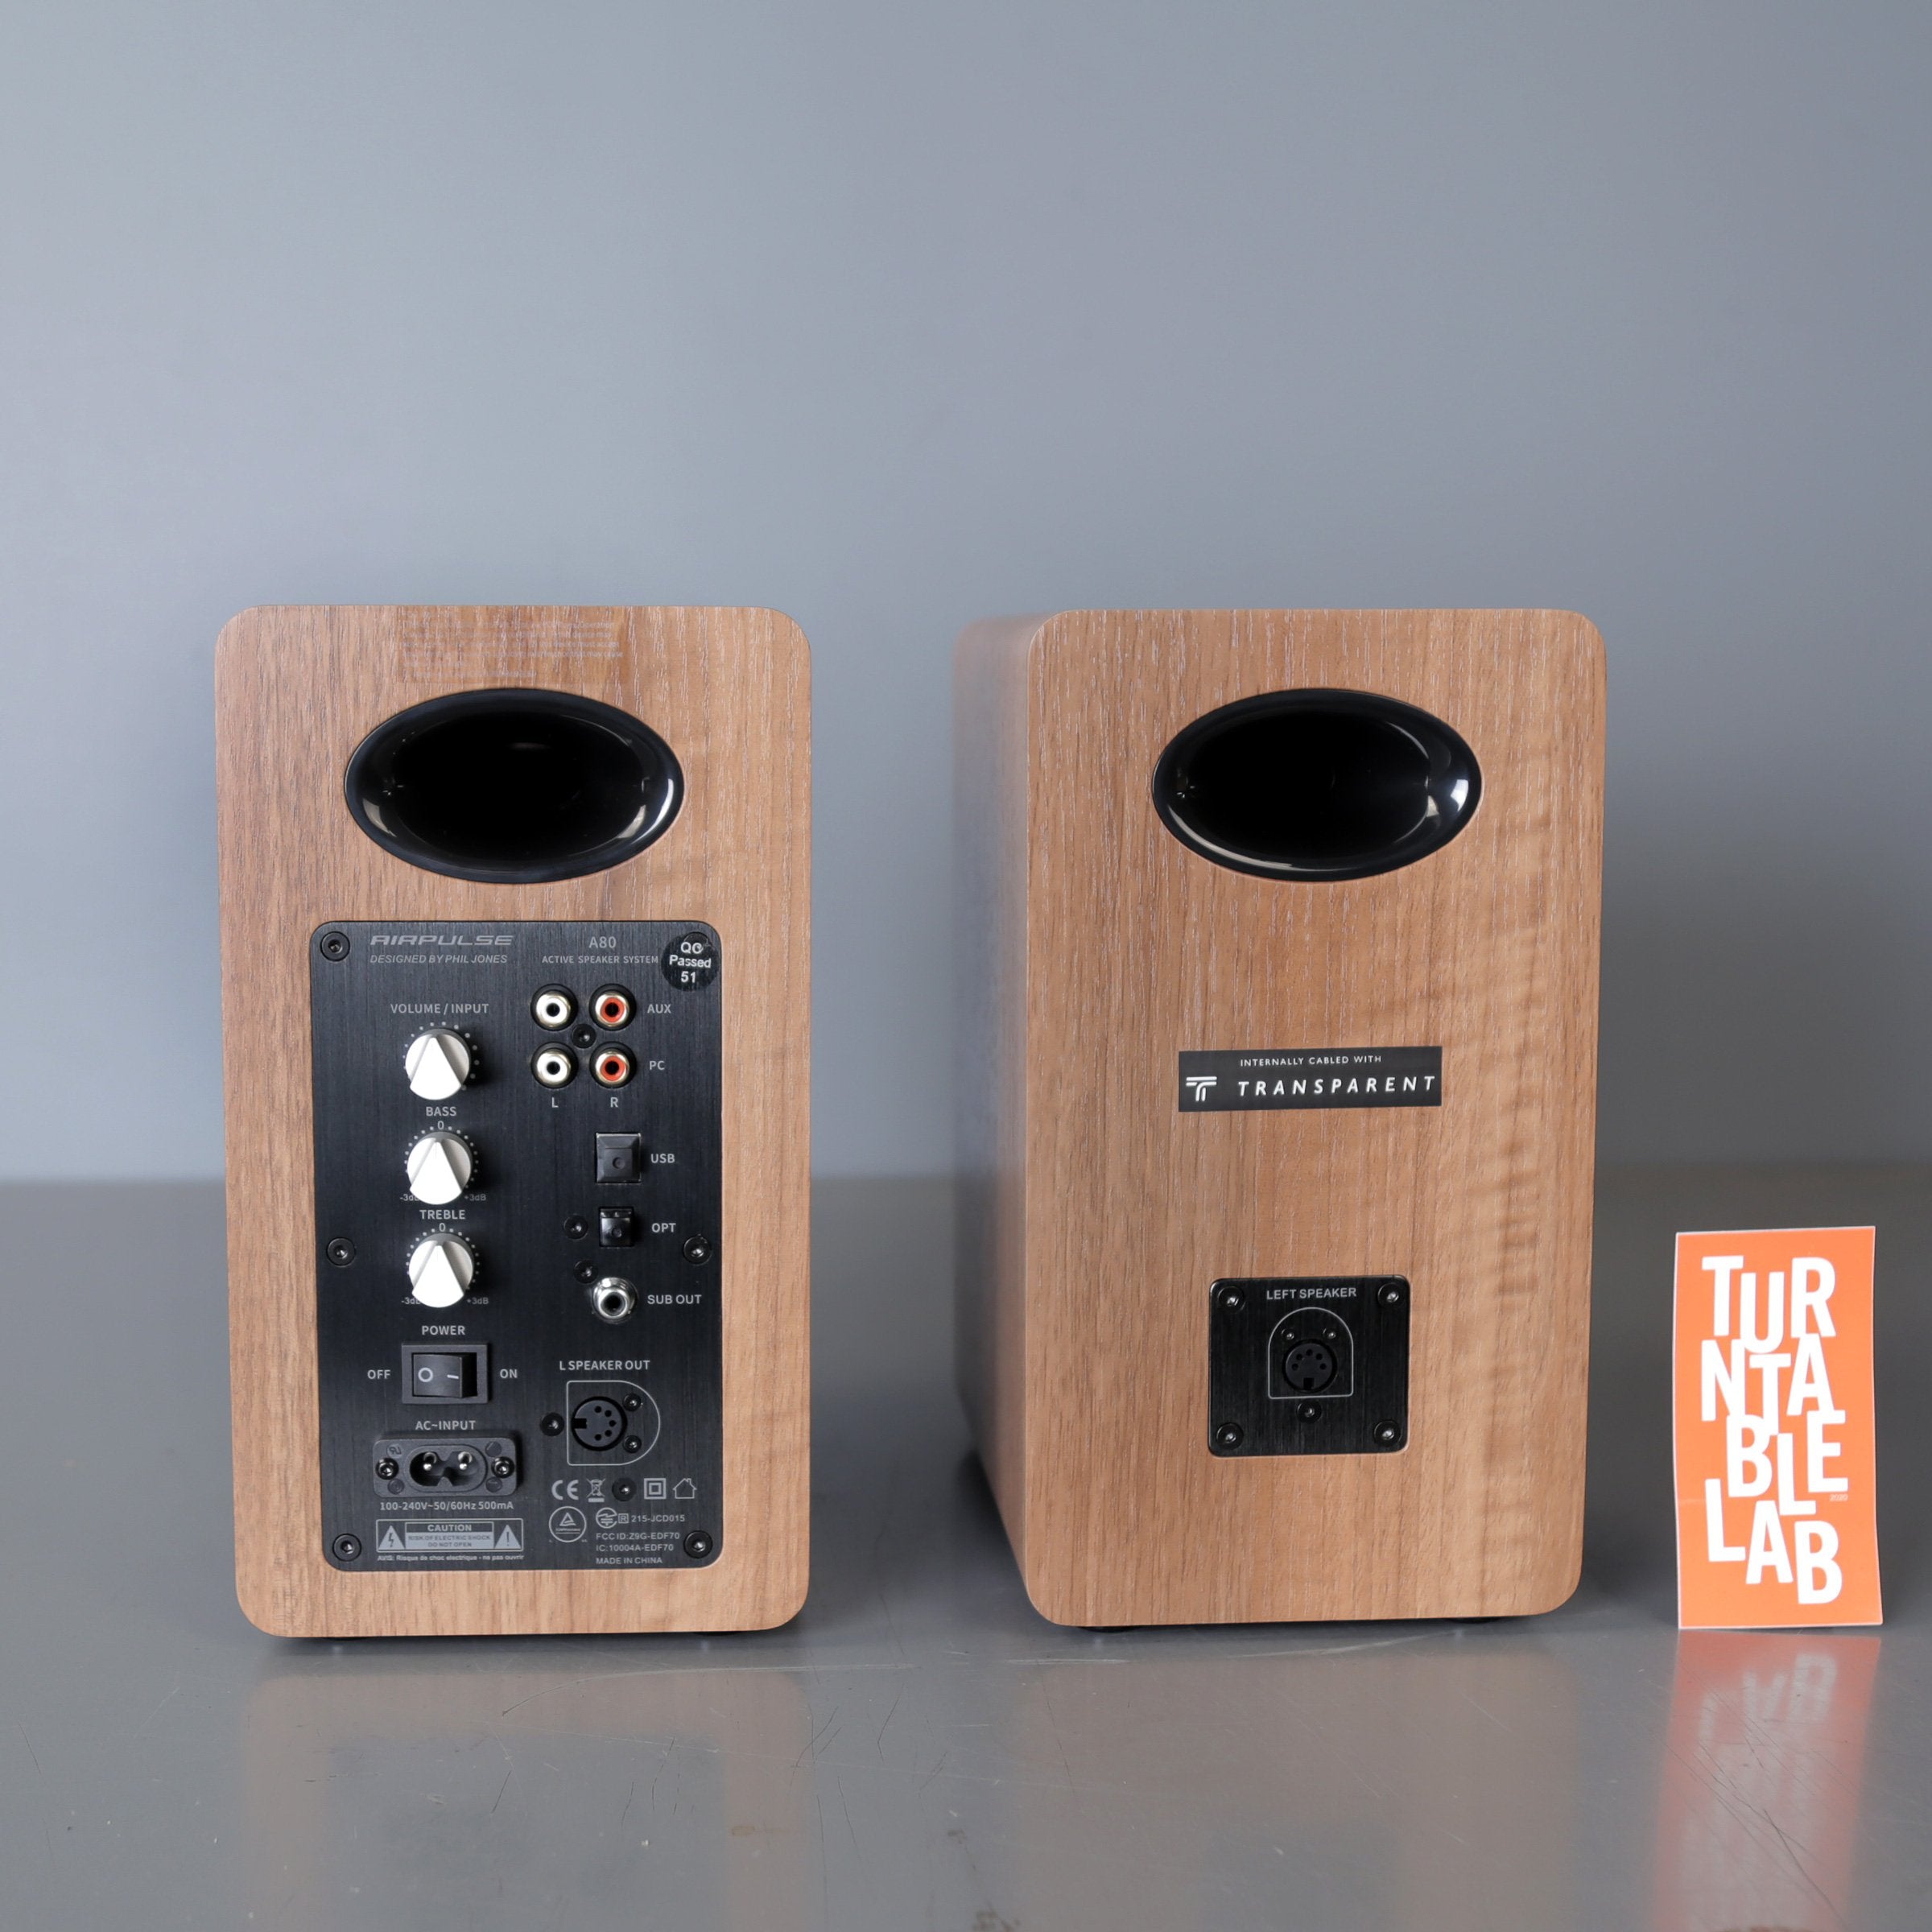 Edifier: Airpulse A80 Powered Speakers w/Bluetooth - Wood Brown